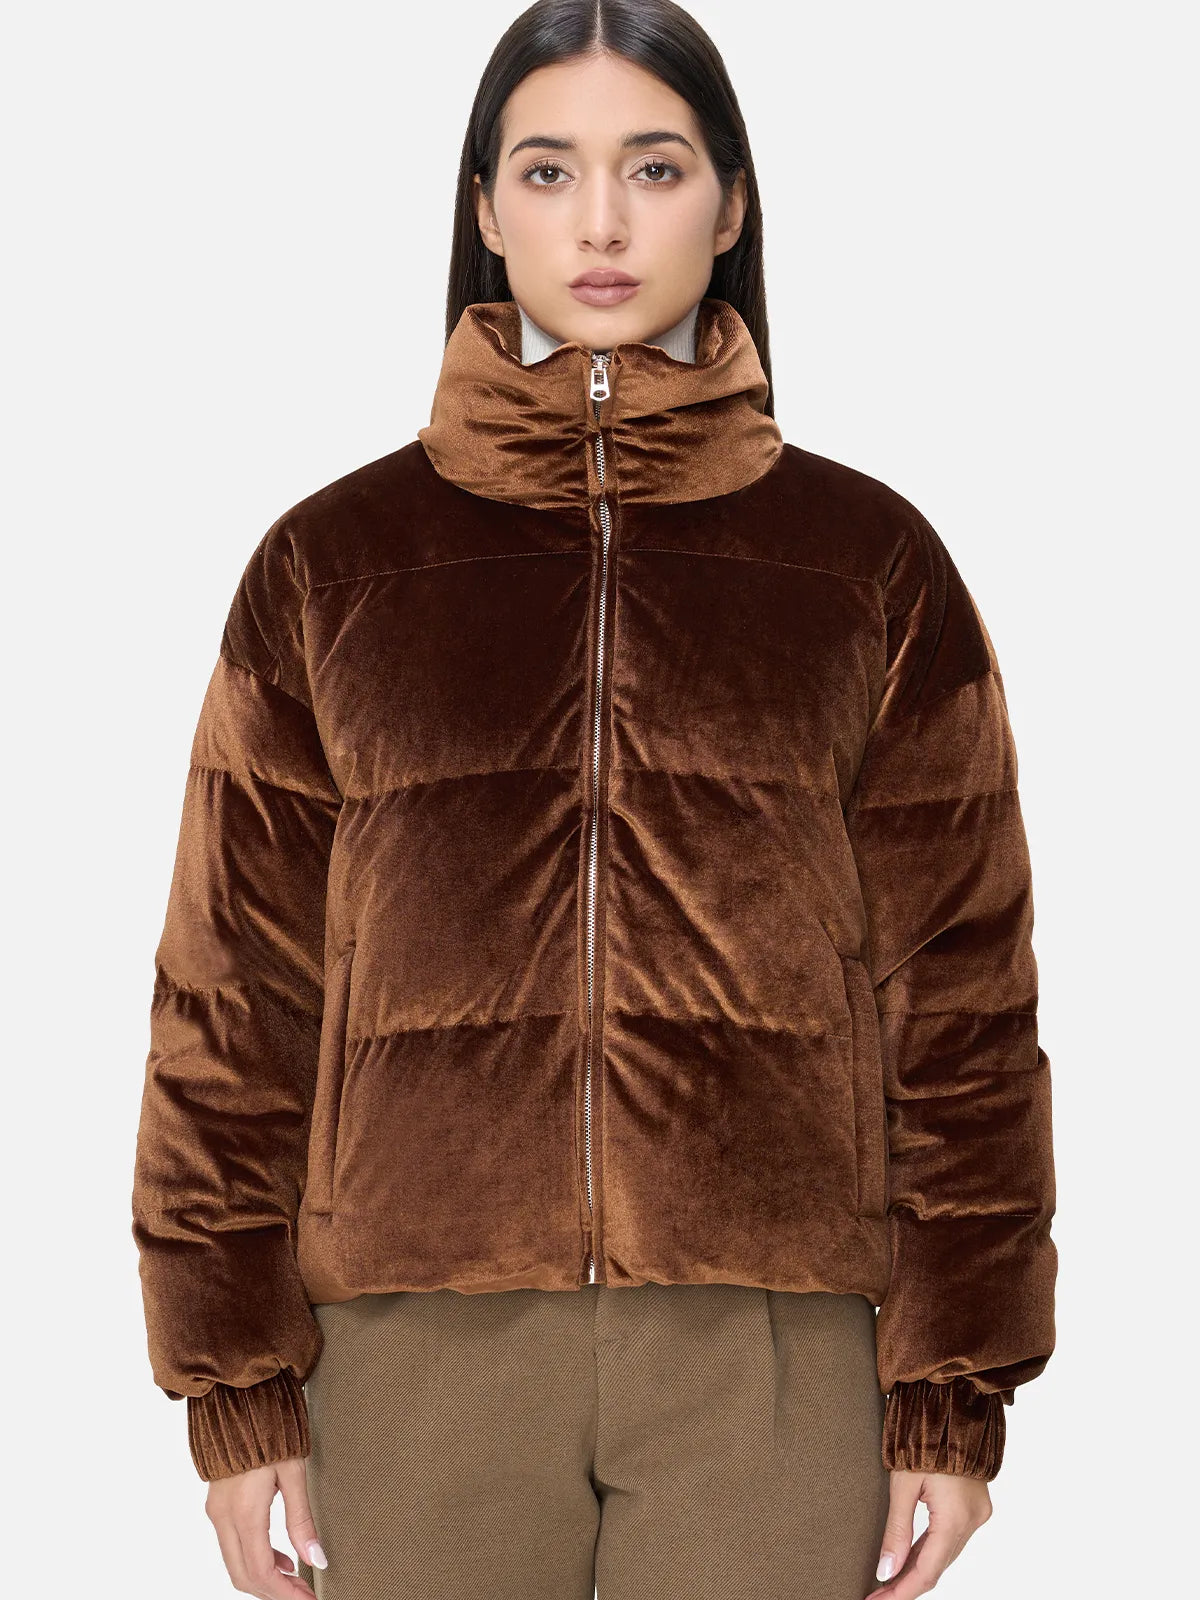 Chic Velvet Puffer Jacket with Goose Down Filling for Winter Elegance